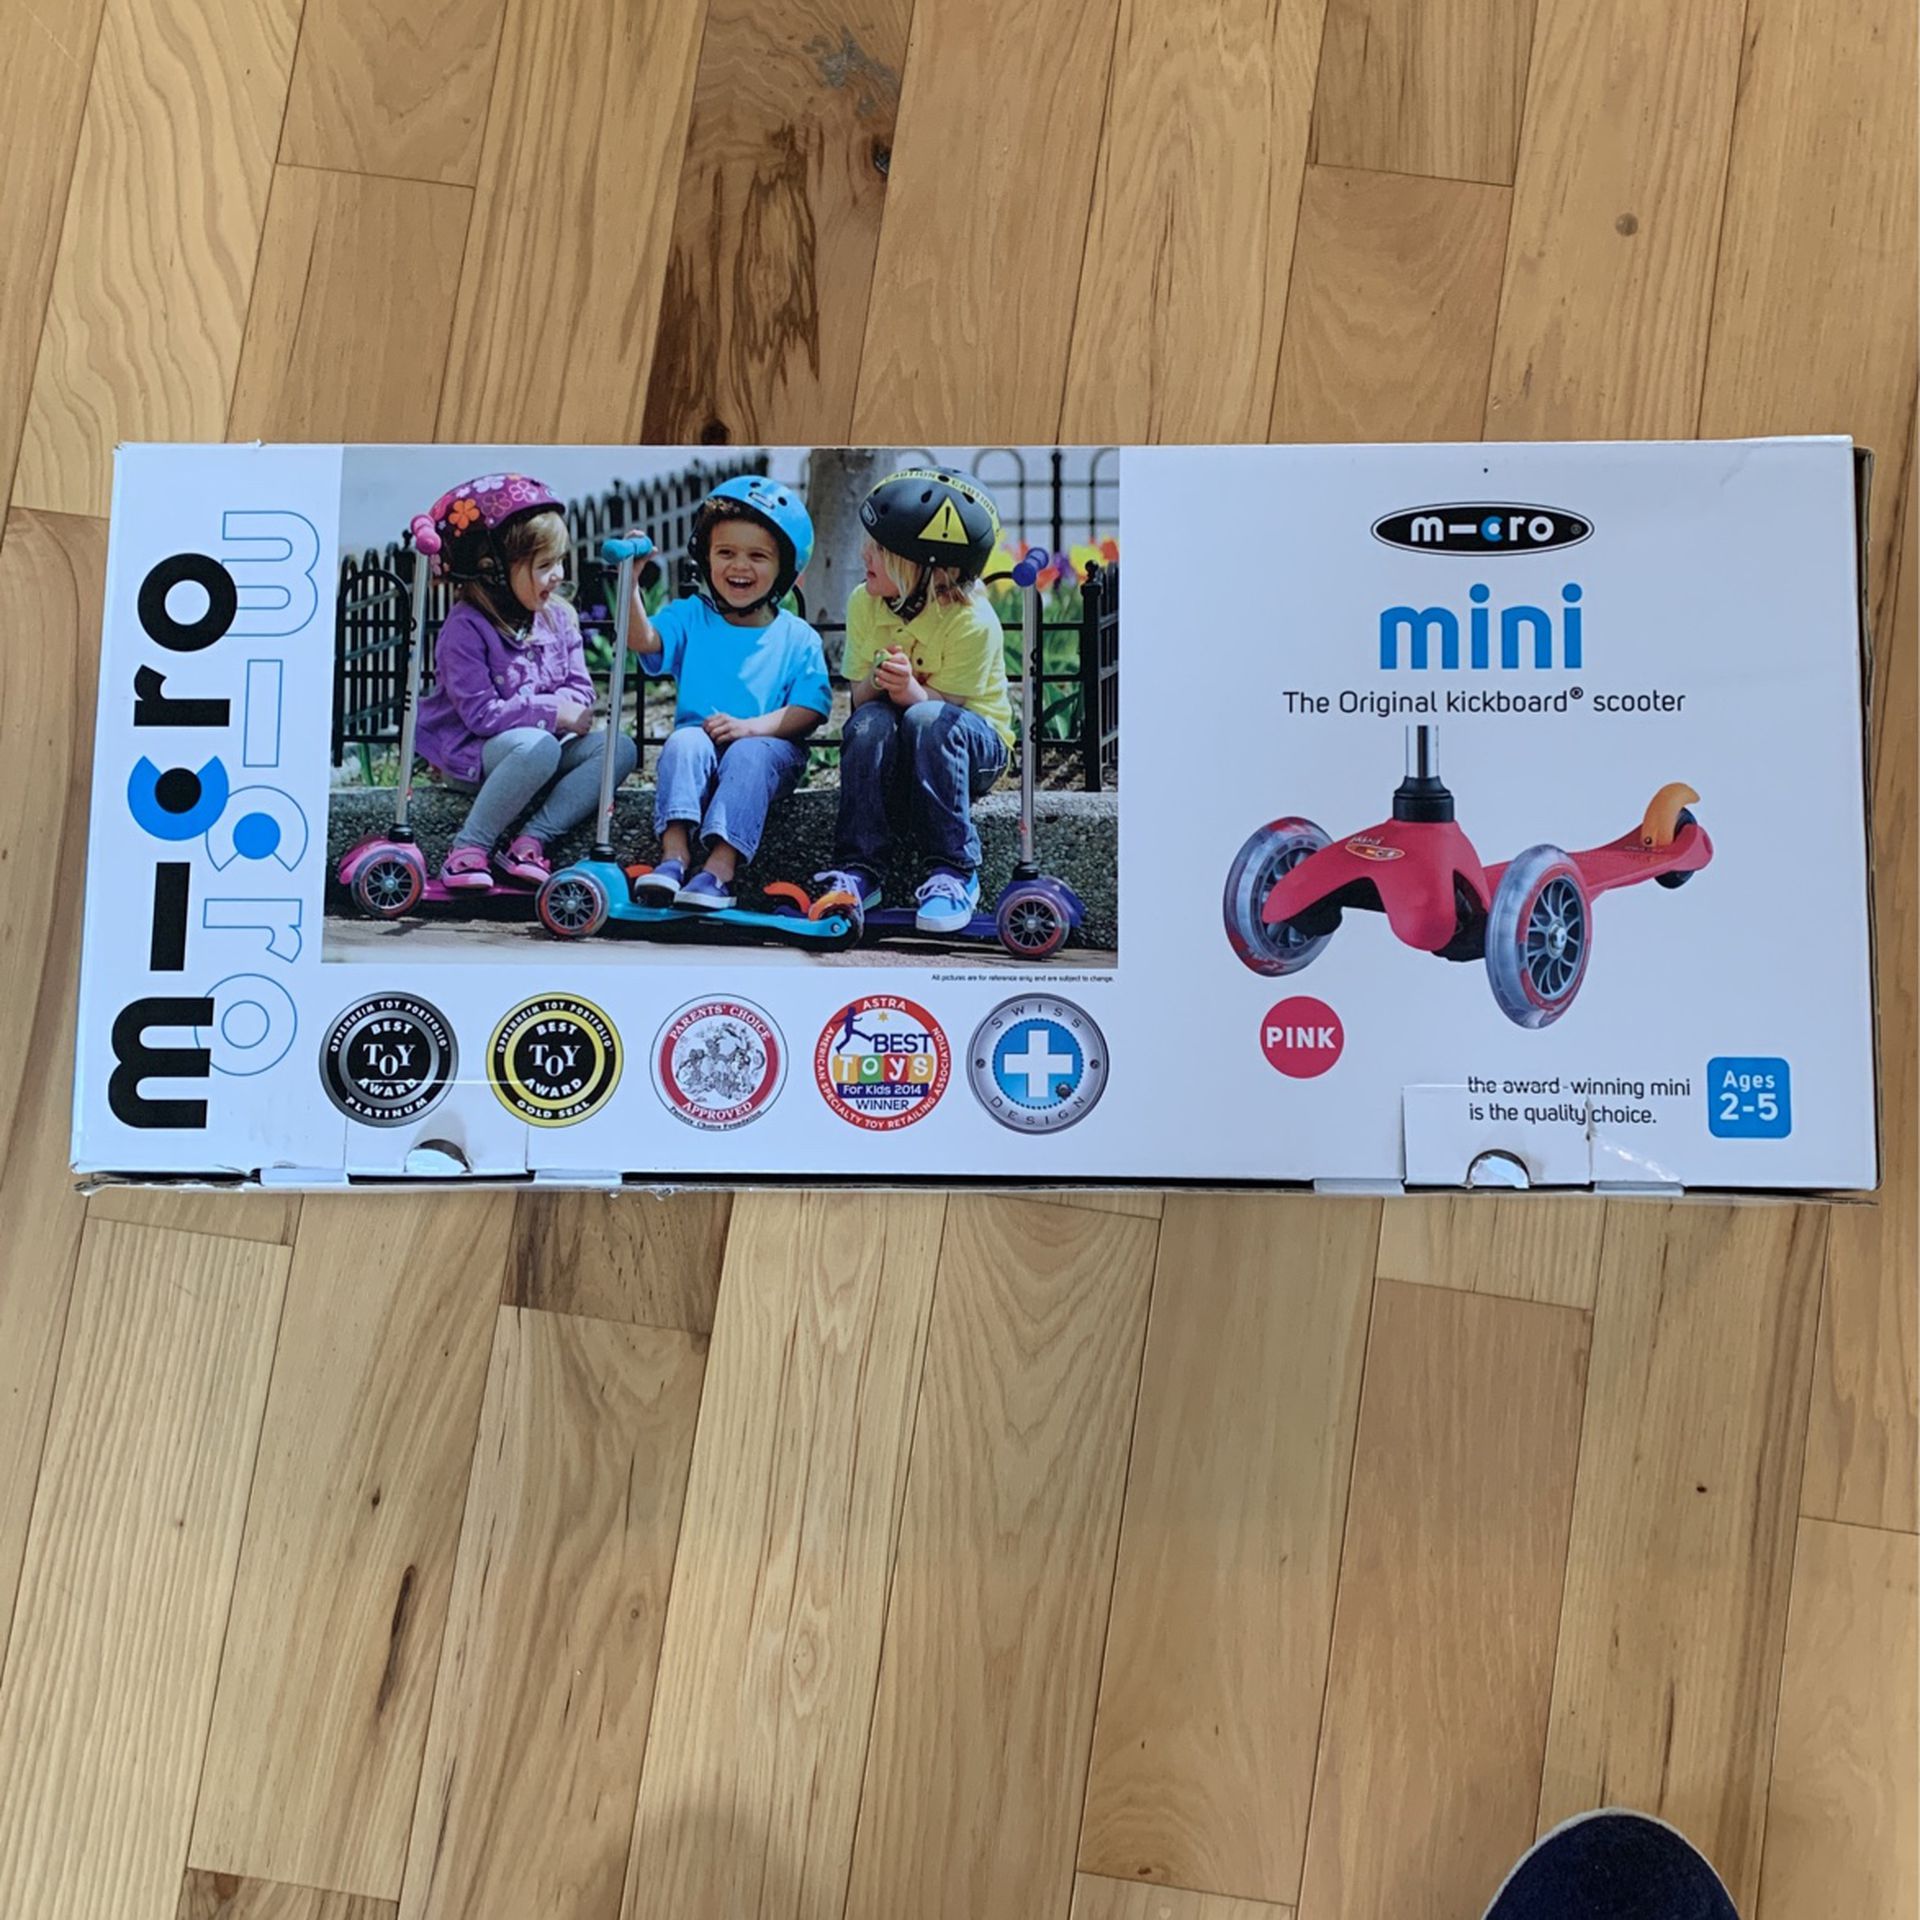 Brand new Micro mini kick board Scooter